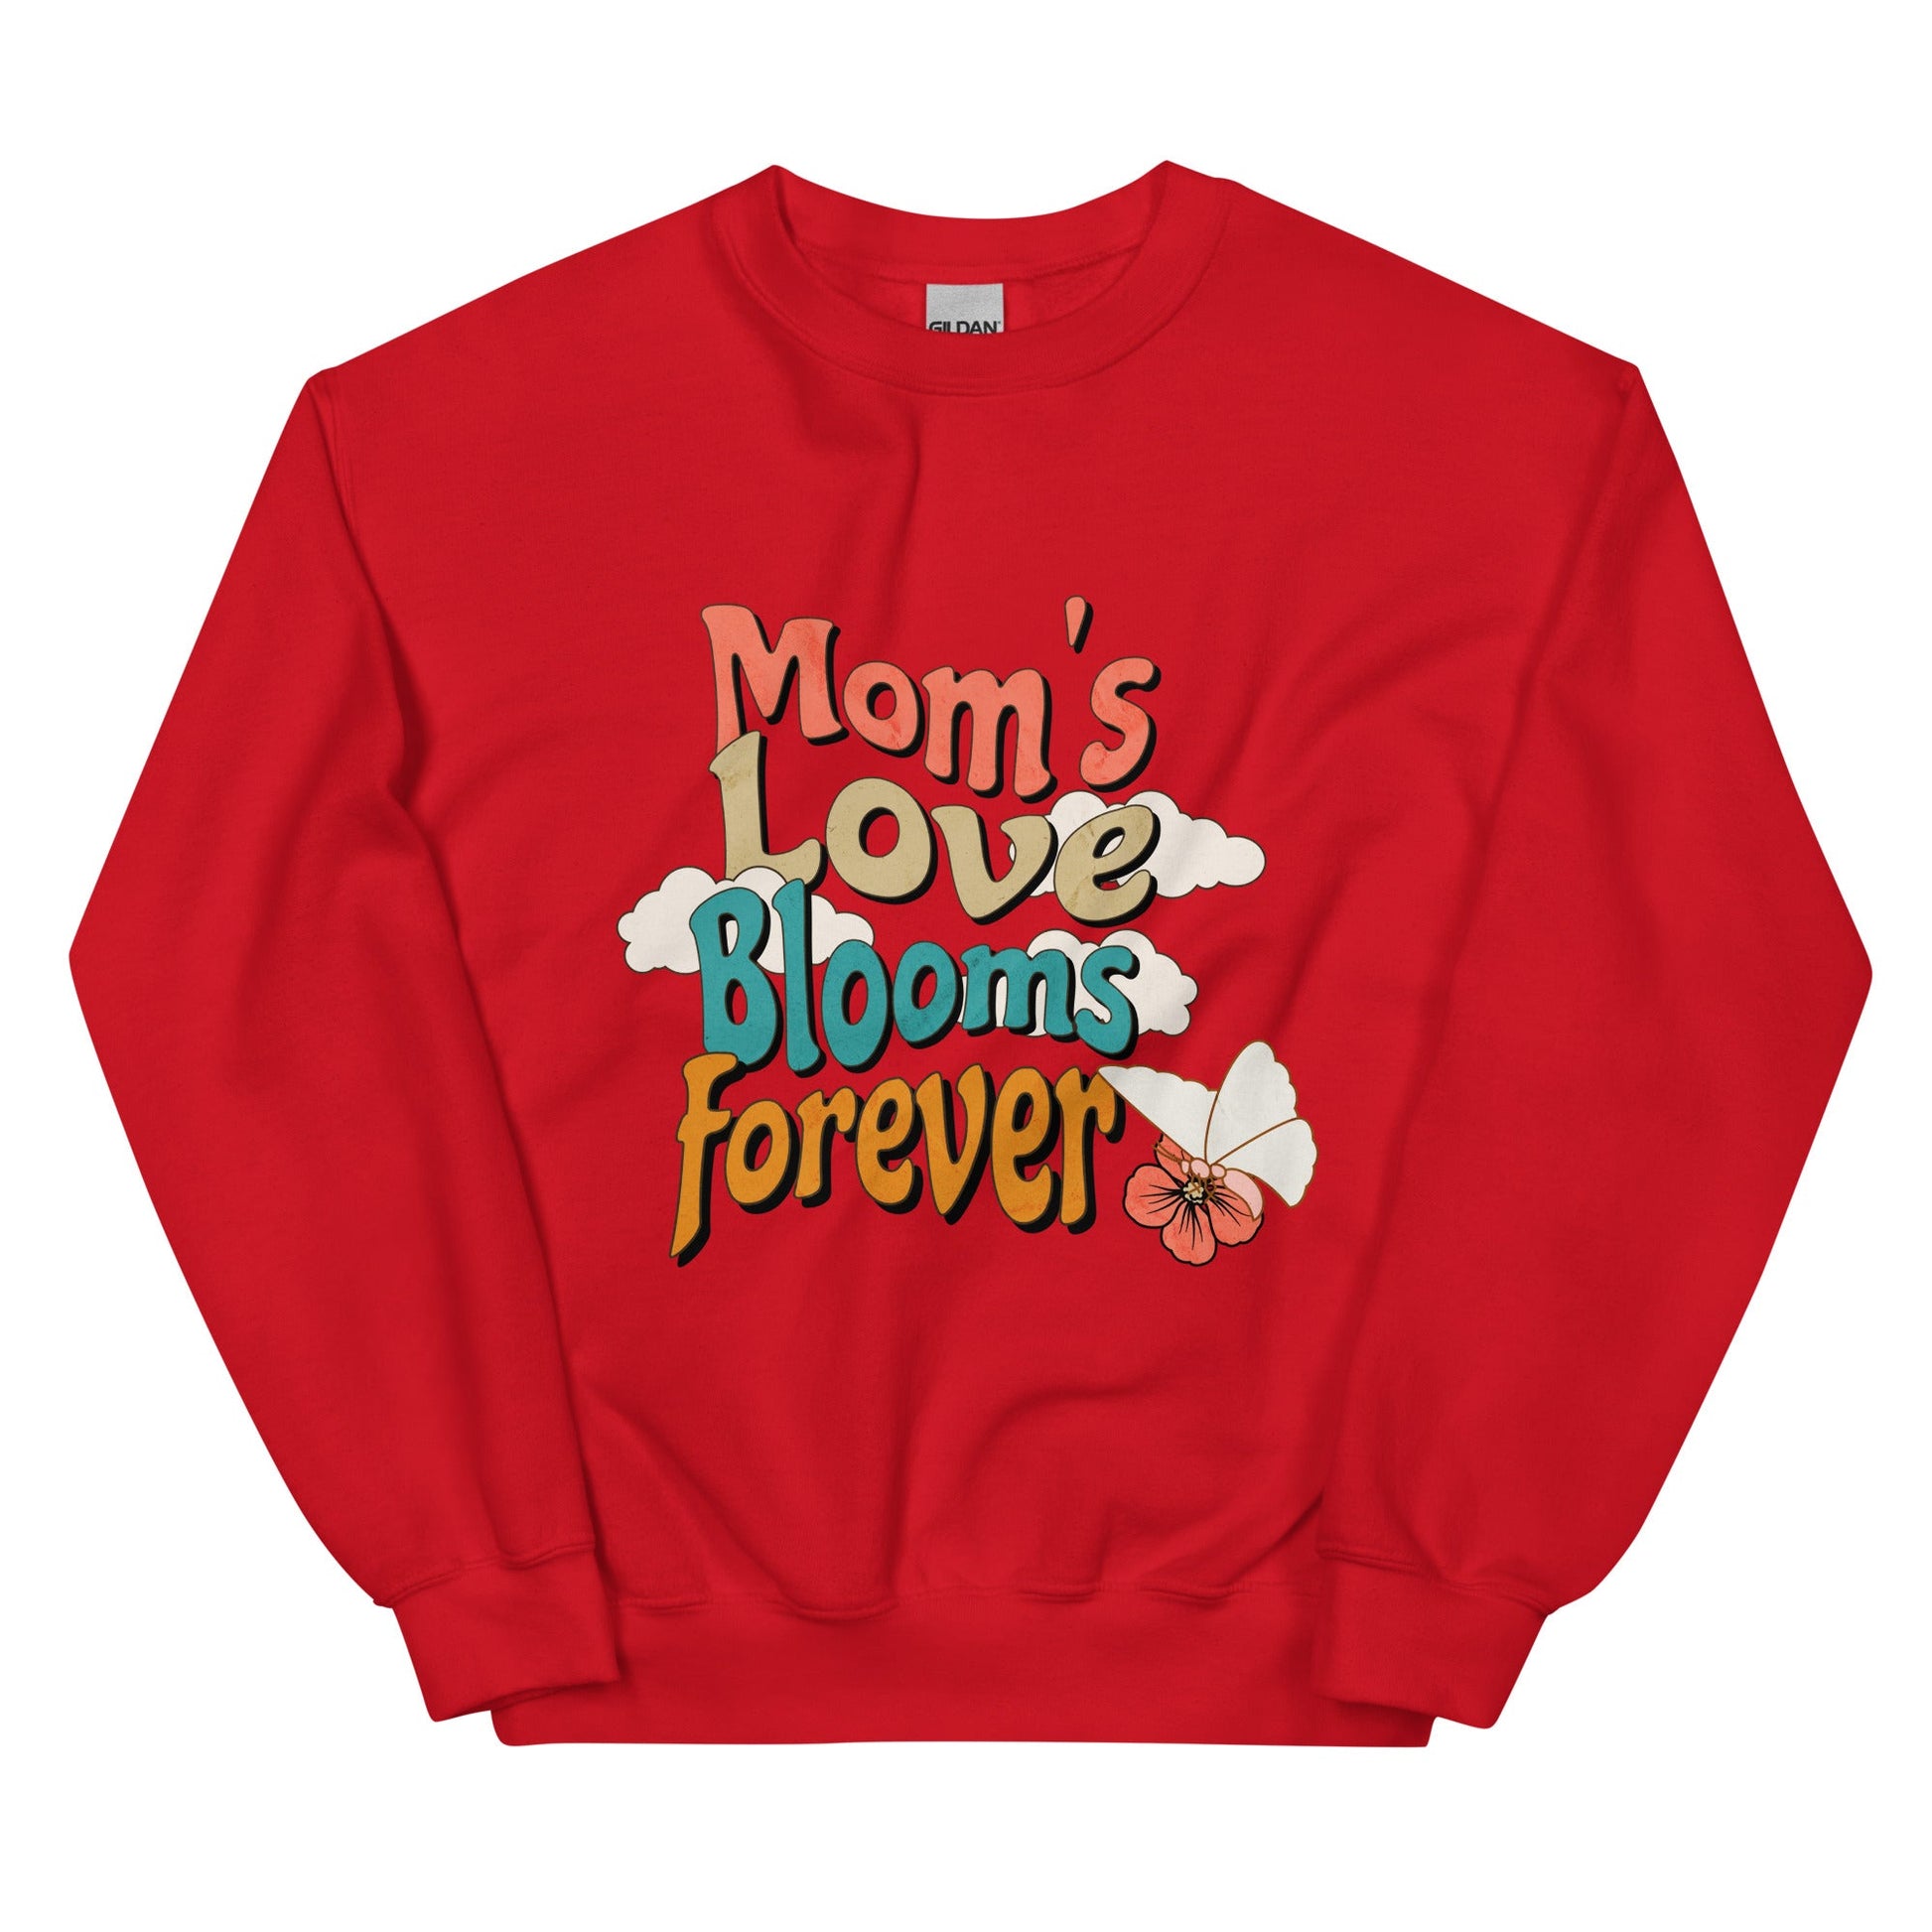 Mom's Love Blooms Forever Crewneck Sweatshirt-crewneck-Red-S-mysticalcherry